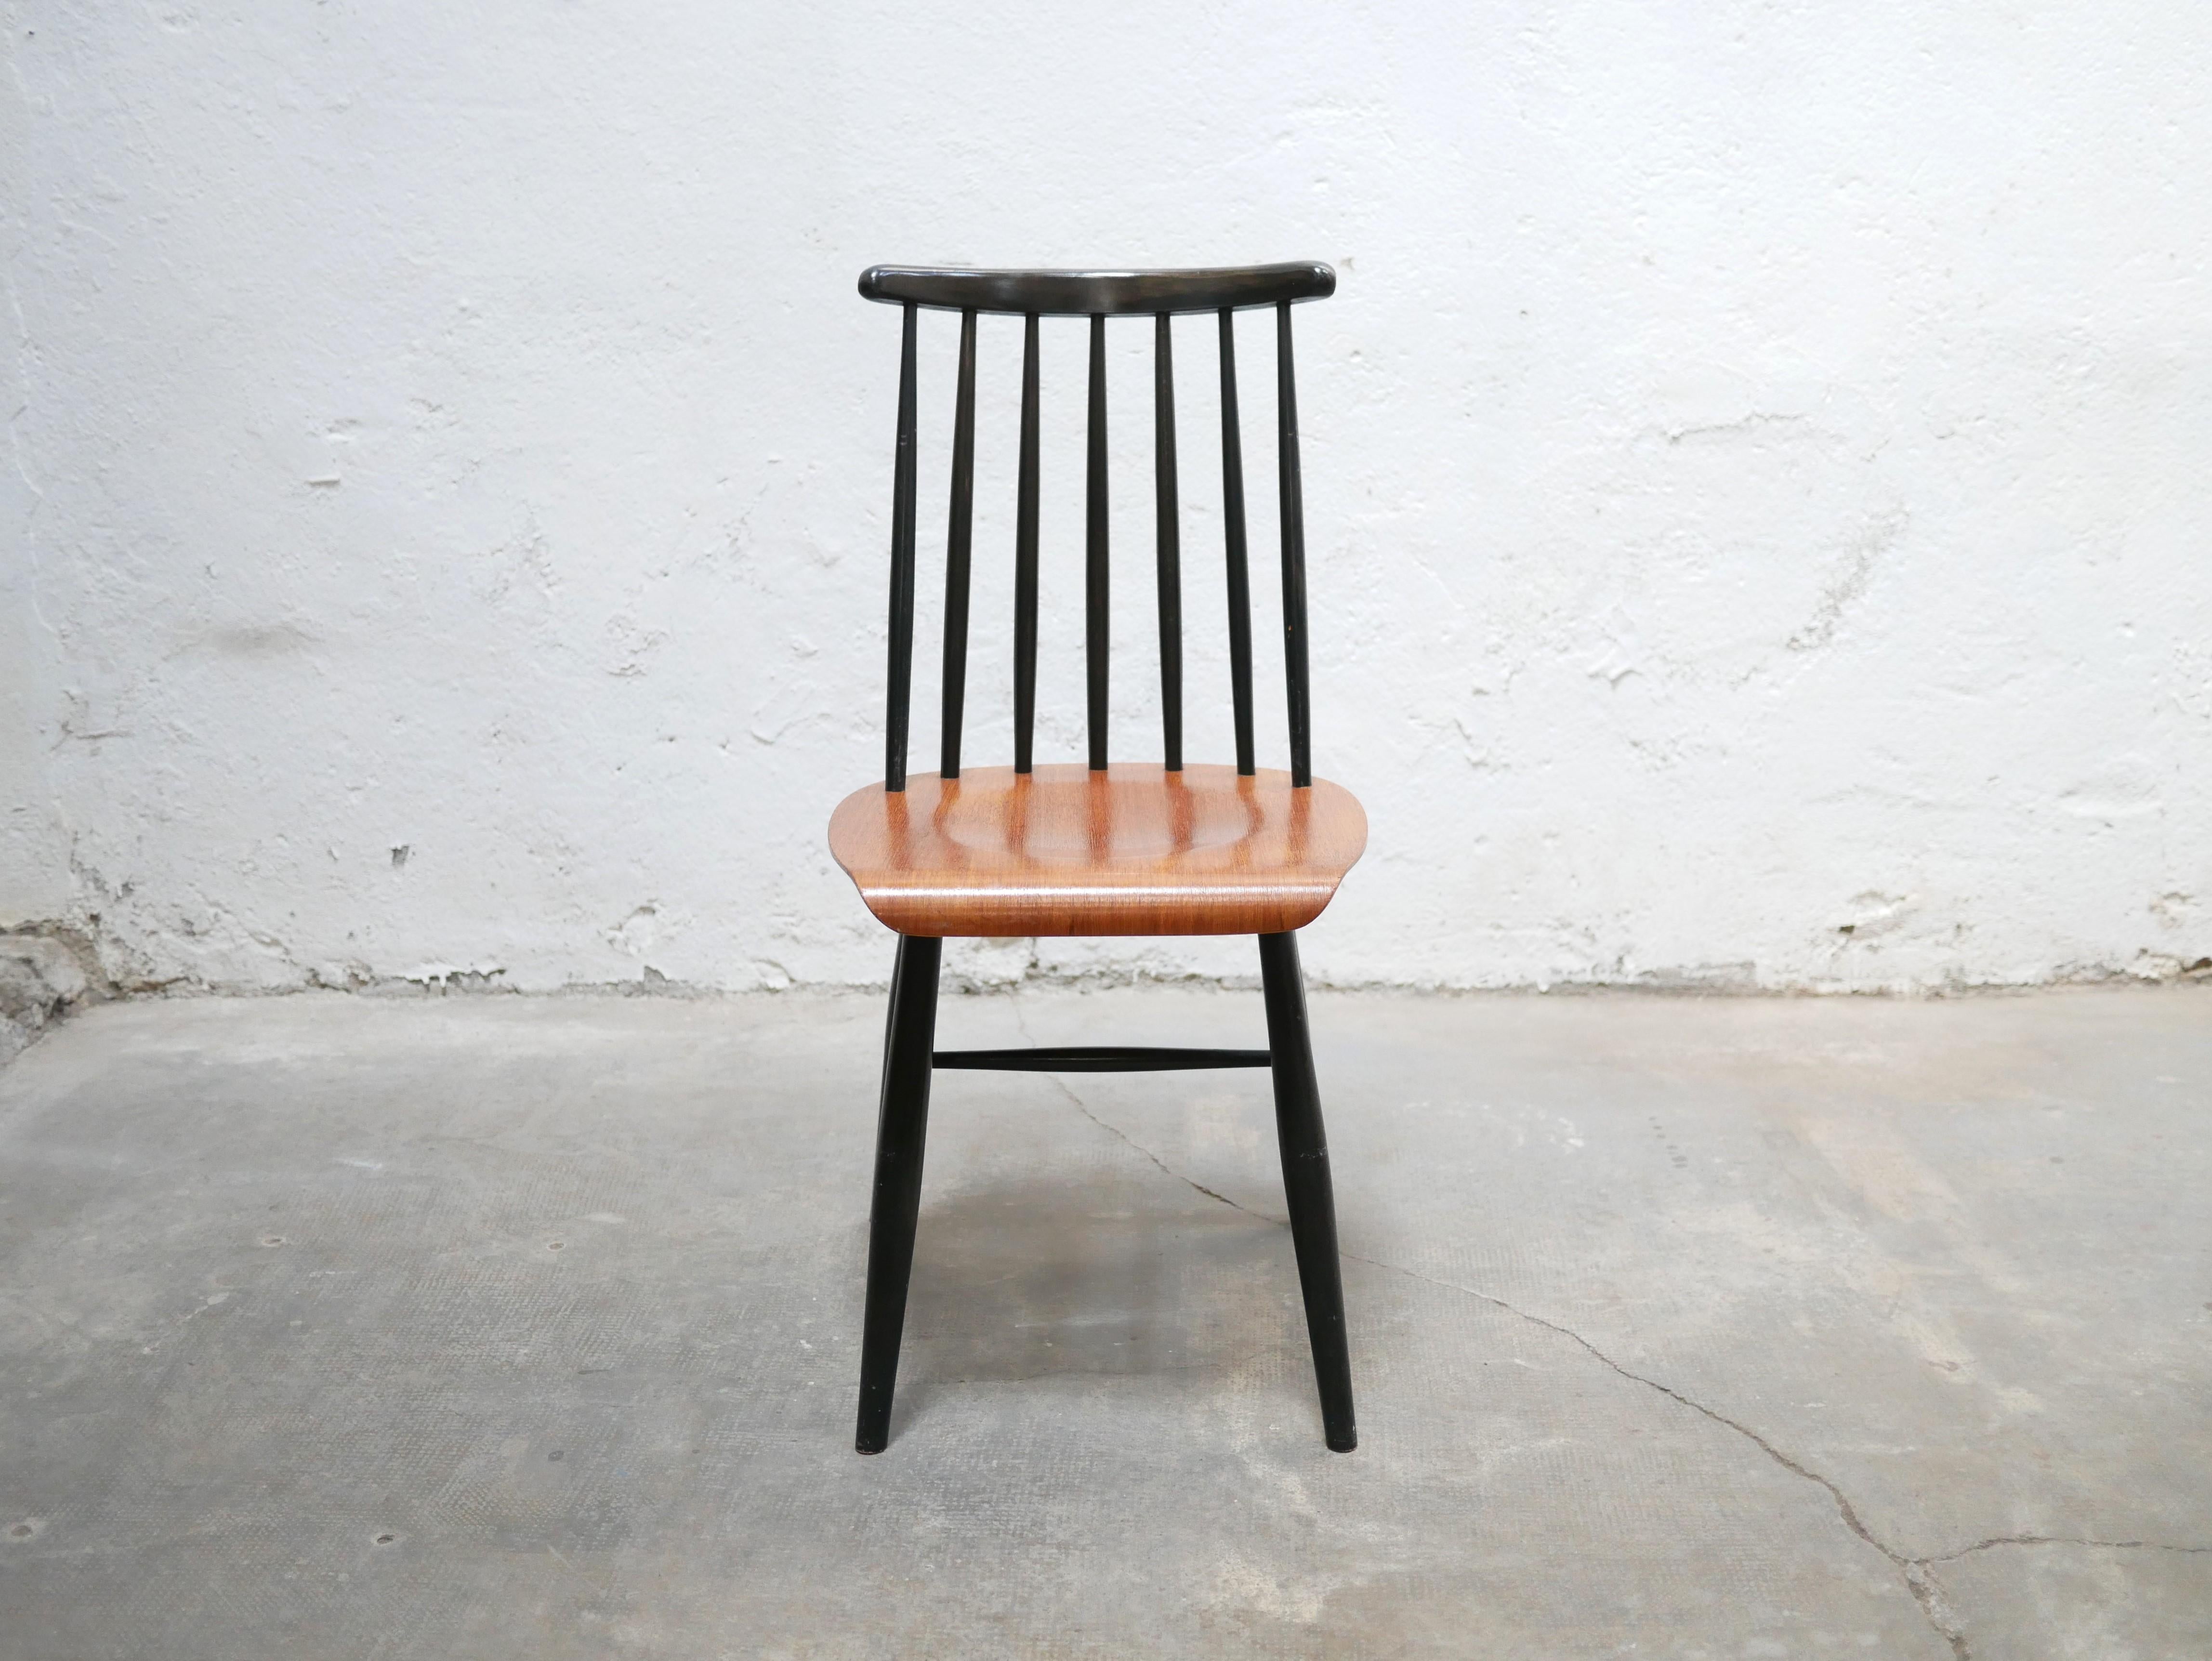 Vintage Scandinavian chair by I.Tapiovaara model Fanett 7